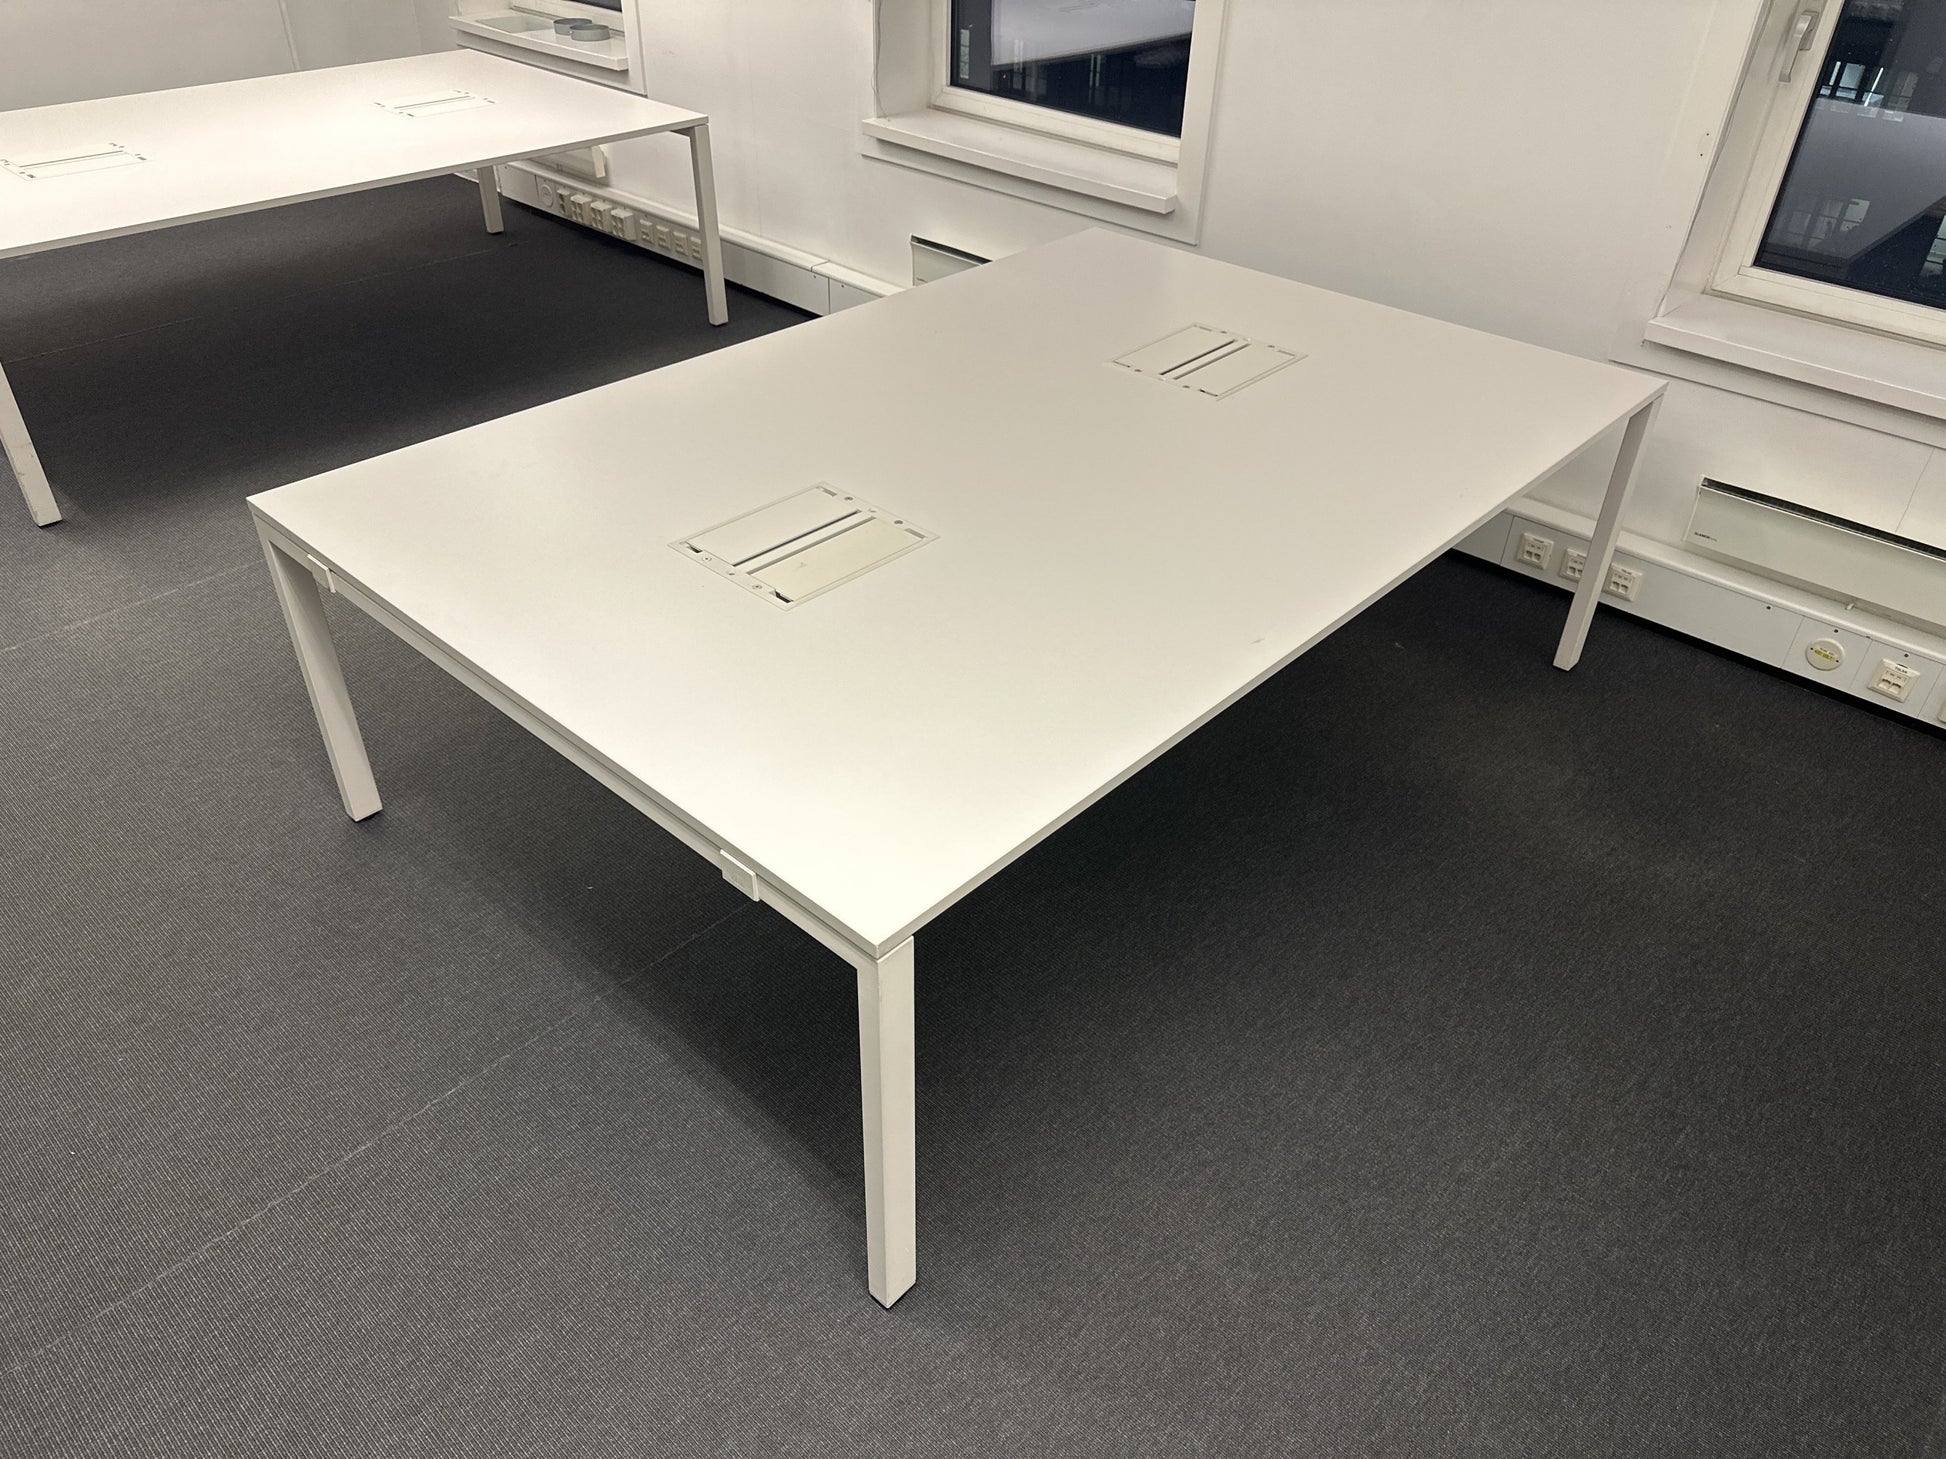 Kvalitetssikret | 240x160 cm, Vitra WorkIt kvadratisk møtebord